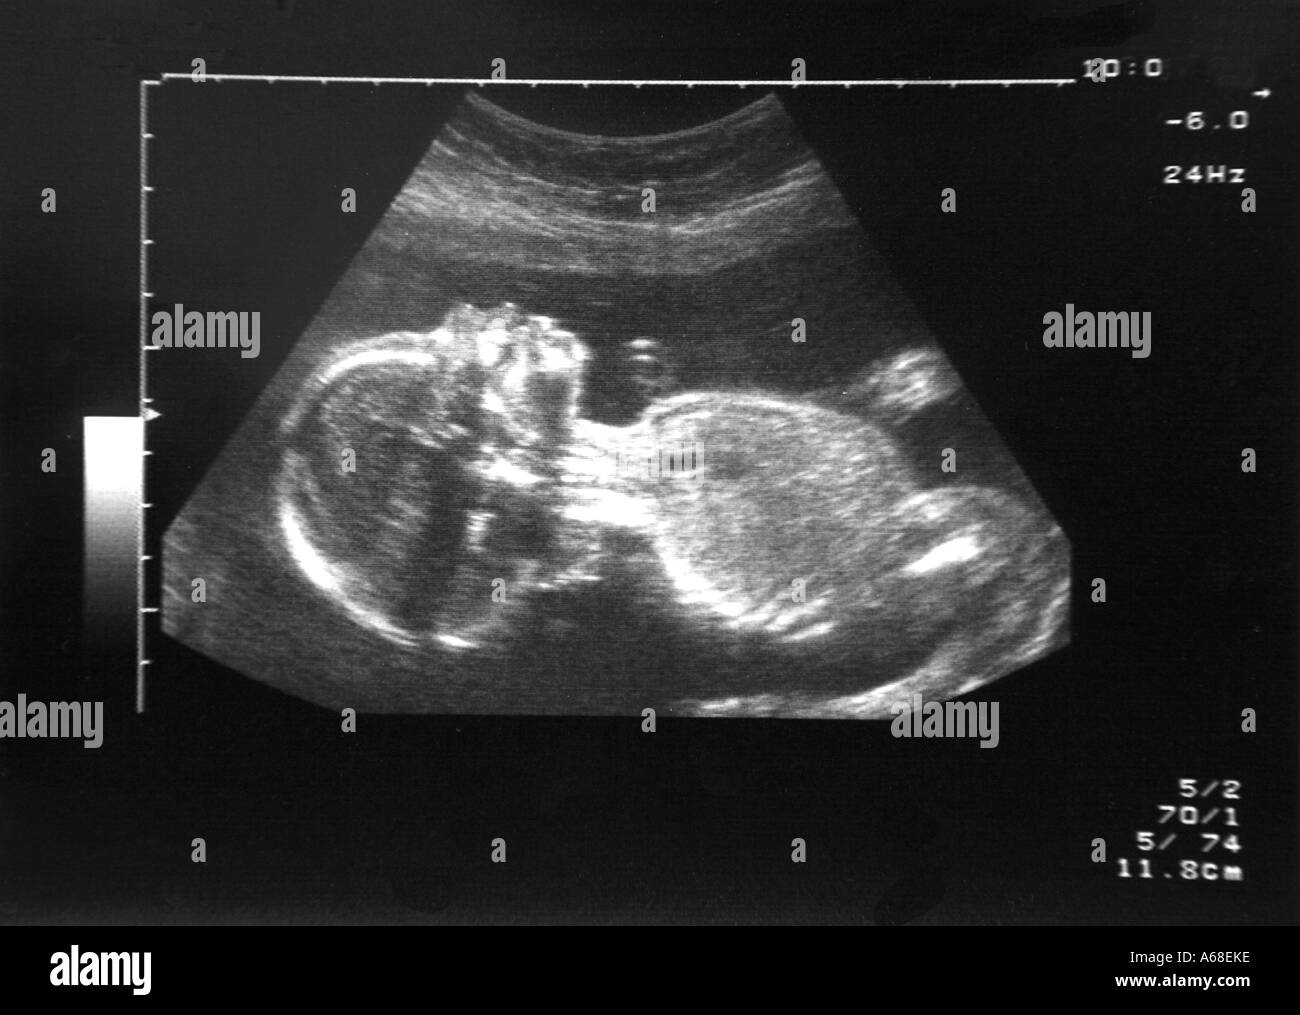 twenty-week-ultrasound-scan-of-a-healthy